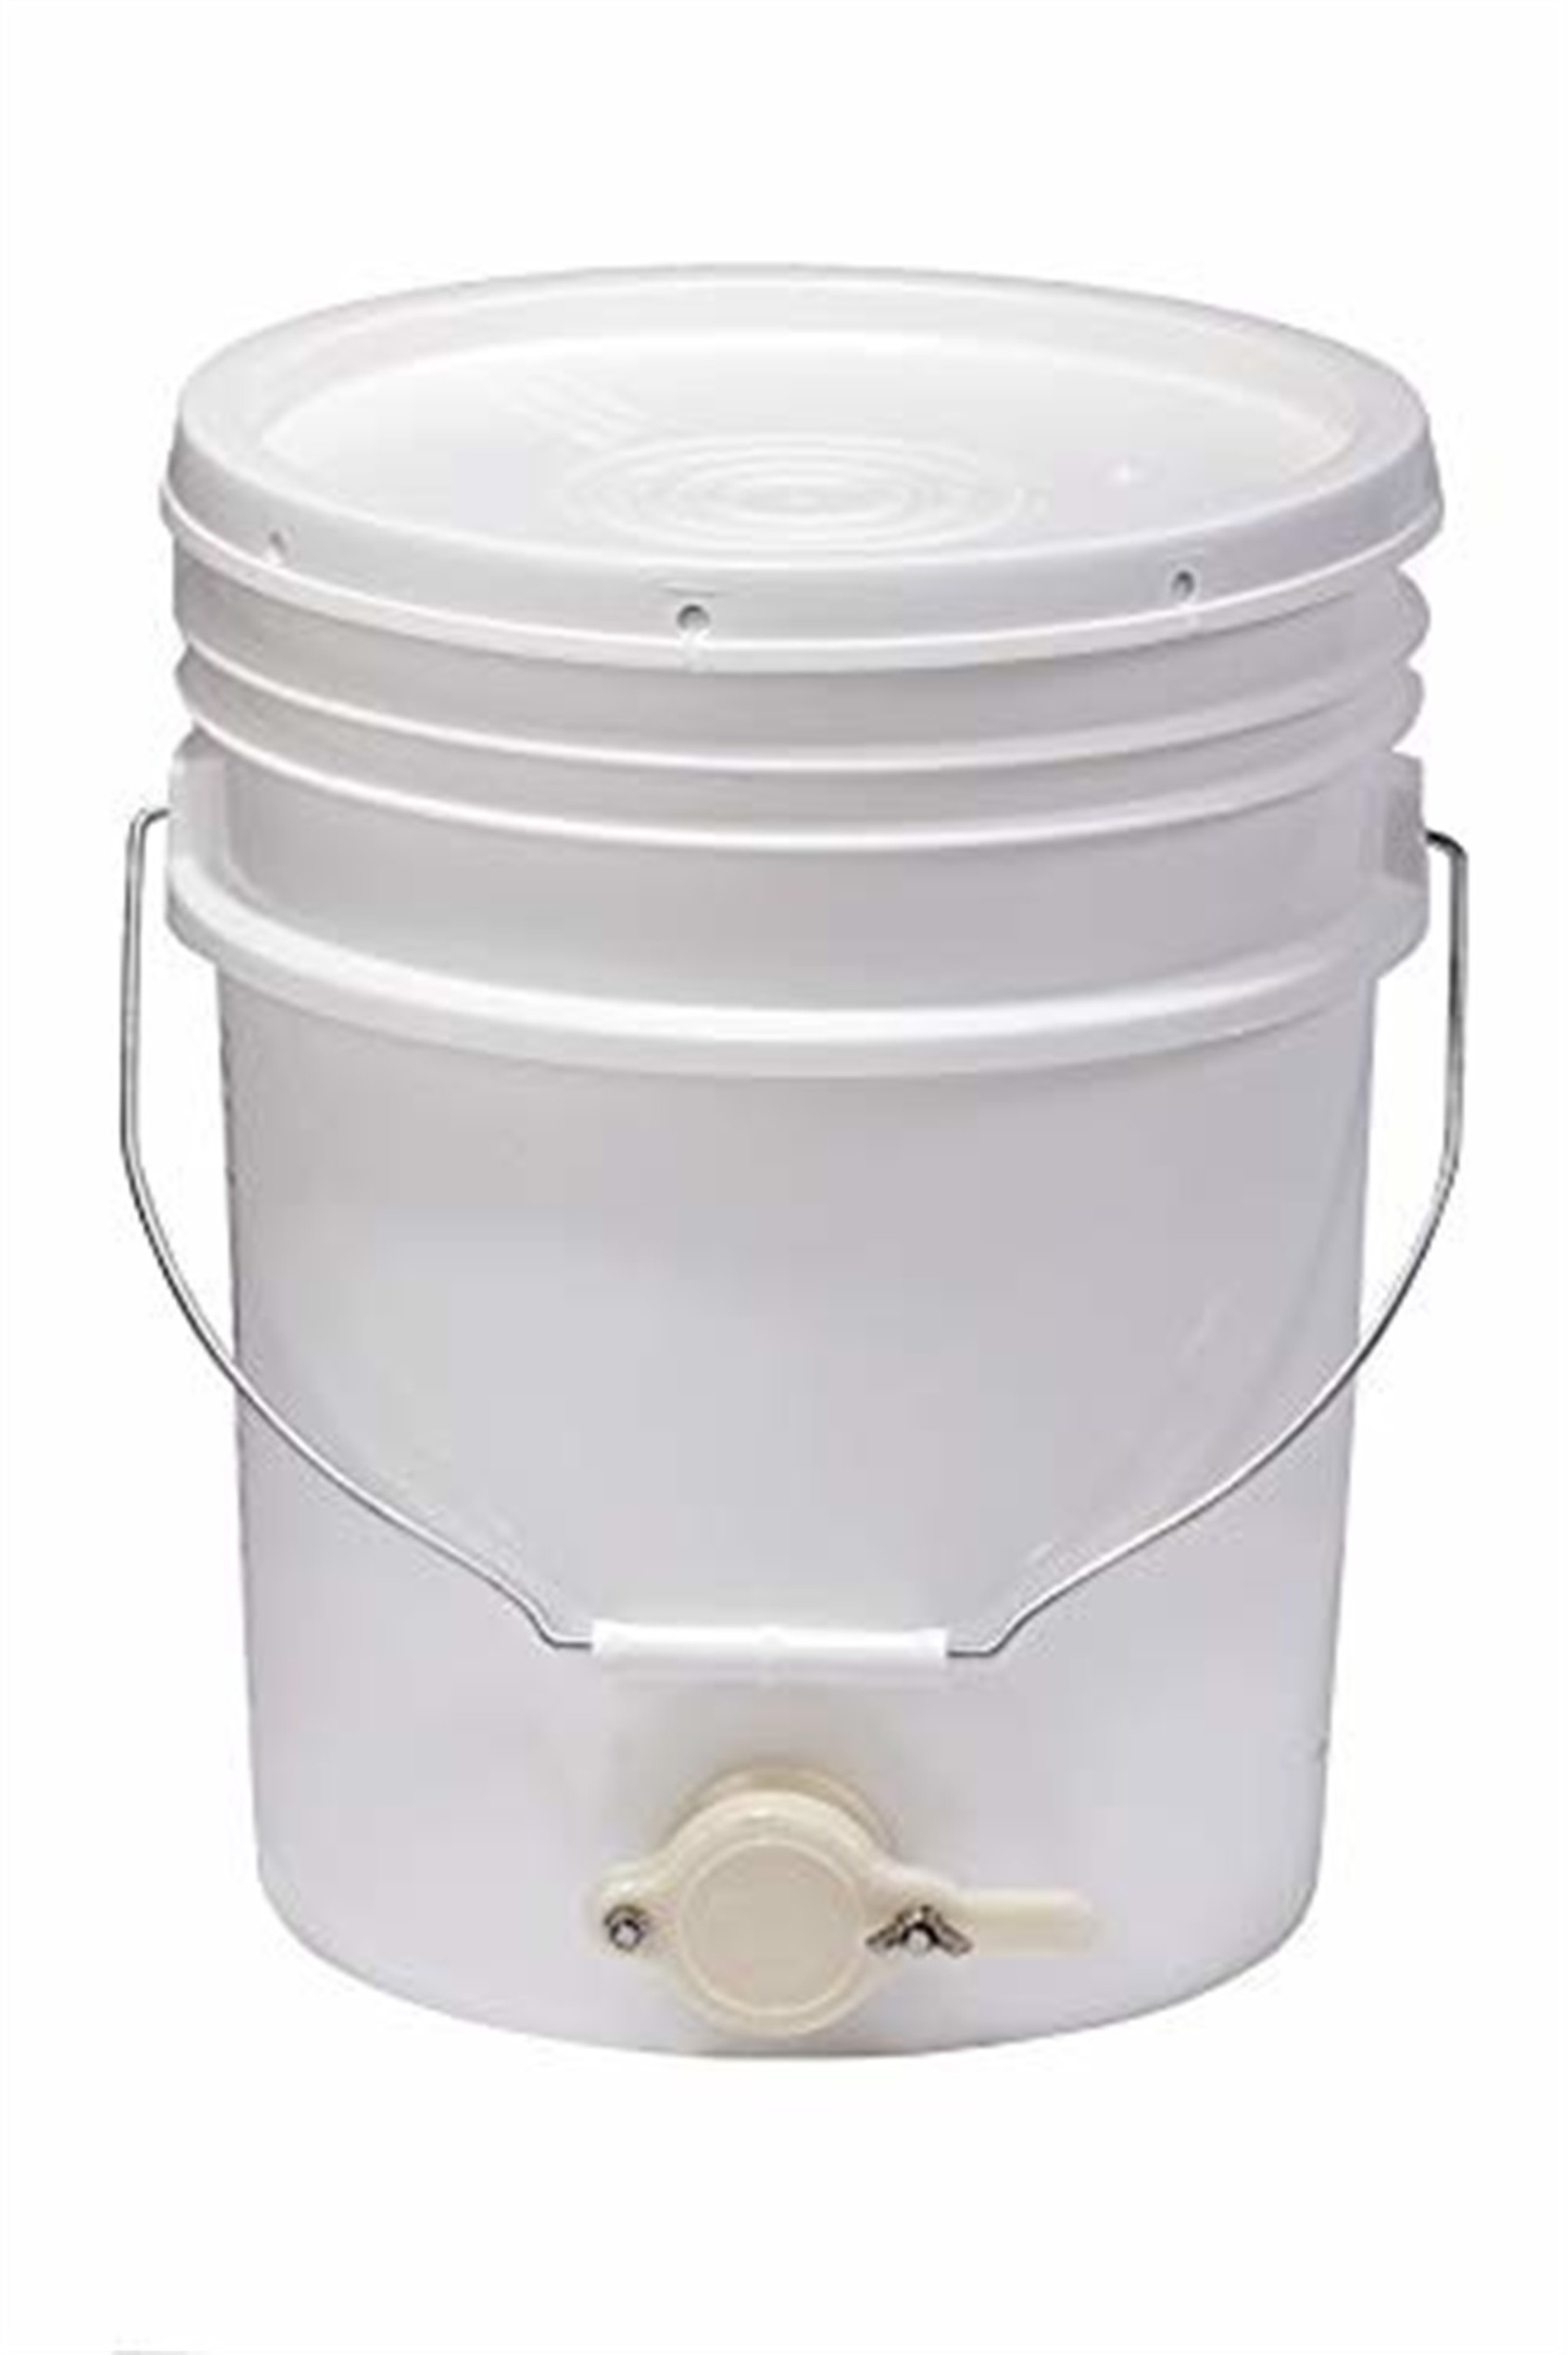 Little Giant Plastic Honey Extractor Bucket with Honey Gate Tool, 5 Gallon